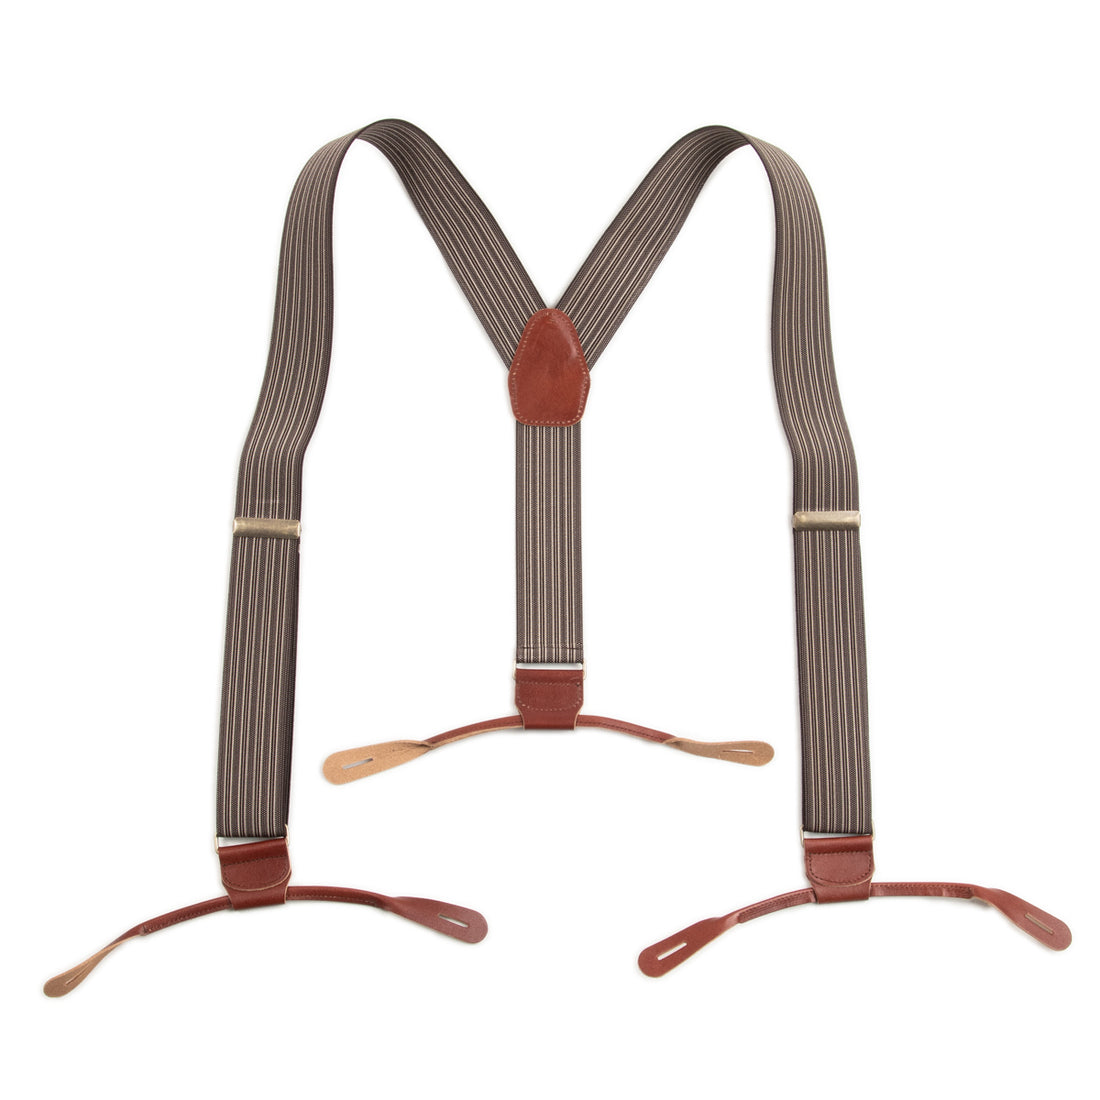 Fullcount Suspenders - Dark Brown - Standard & Strange